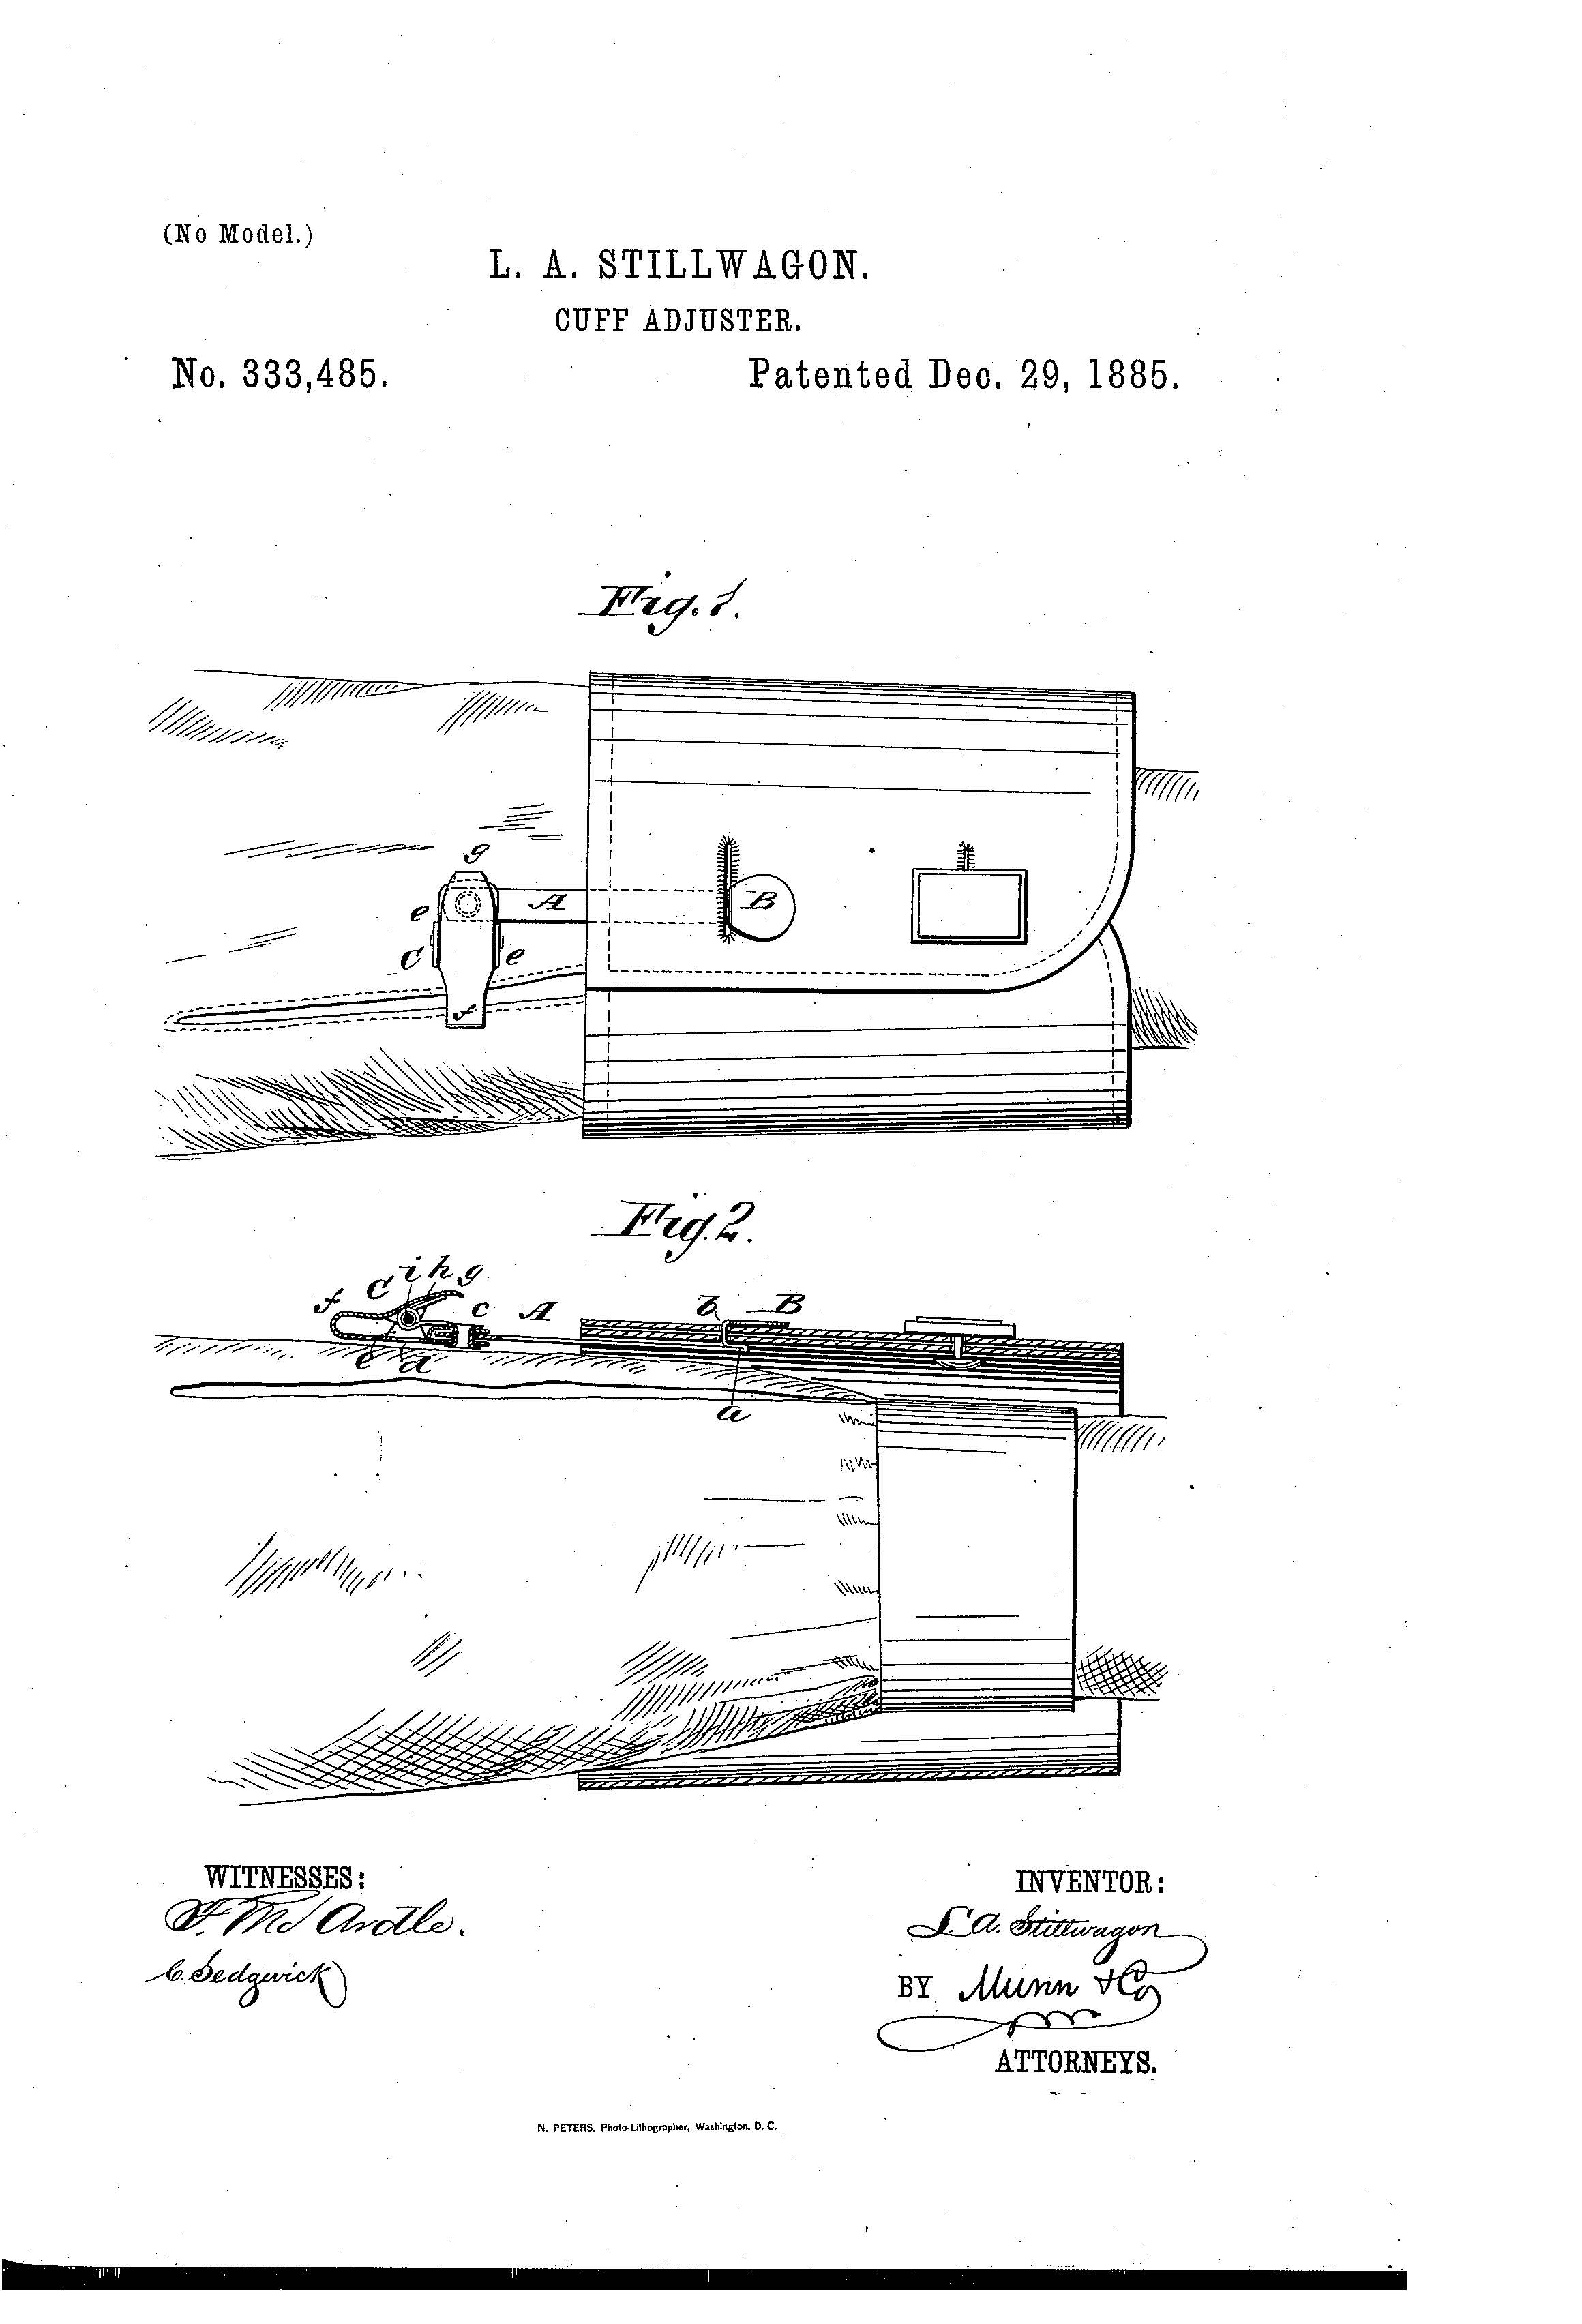 Patent-Illustration-Cuff-Adjuster.jpg